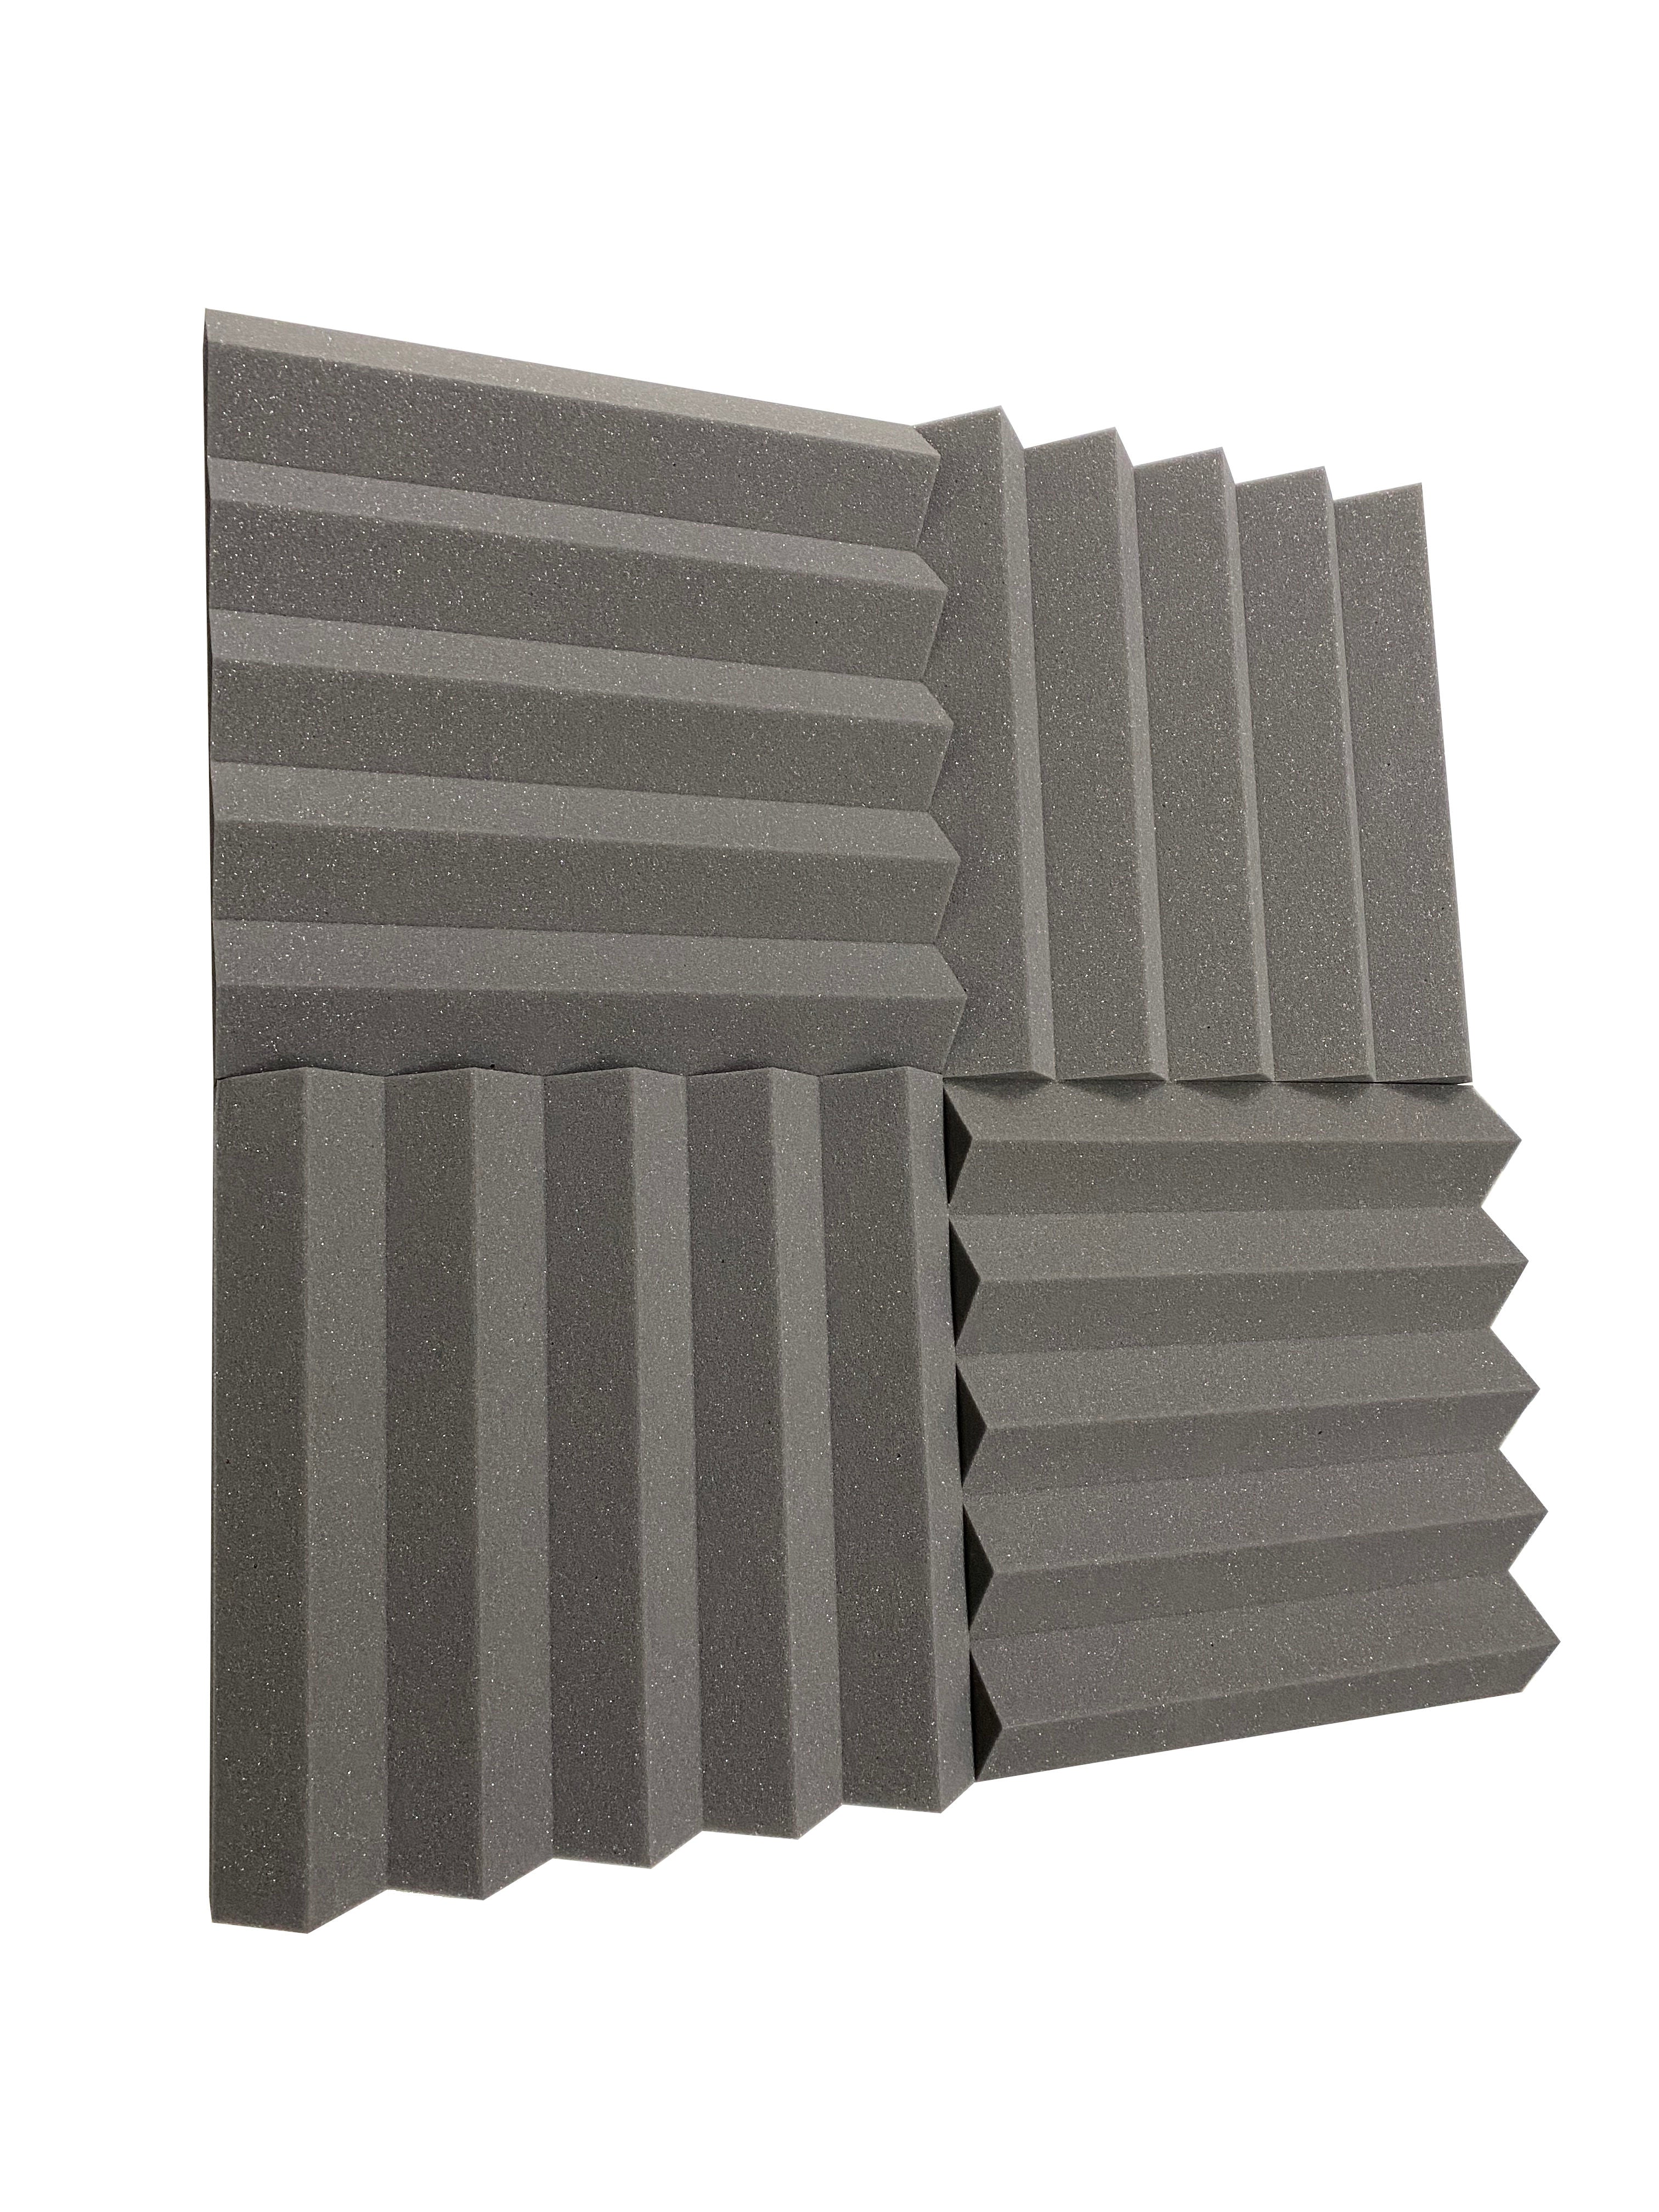 Wedge PRO Combo Acoustic Studio Foam Tile Kit-6